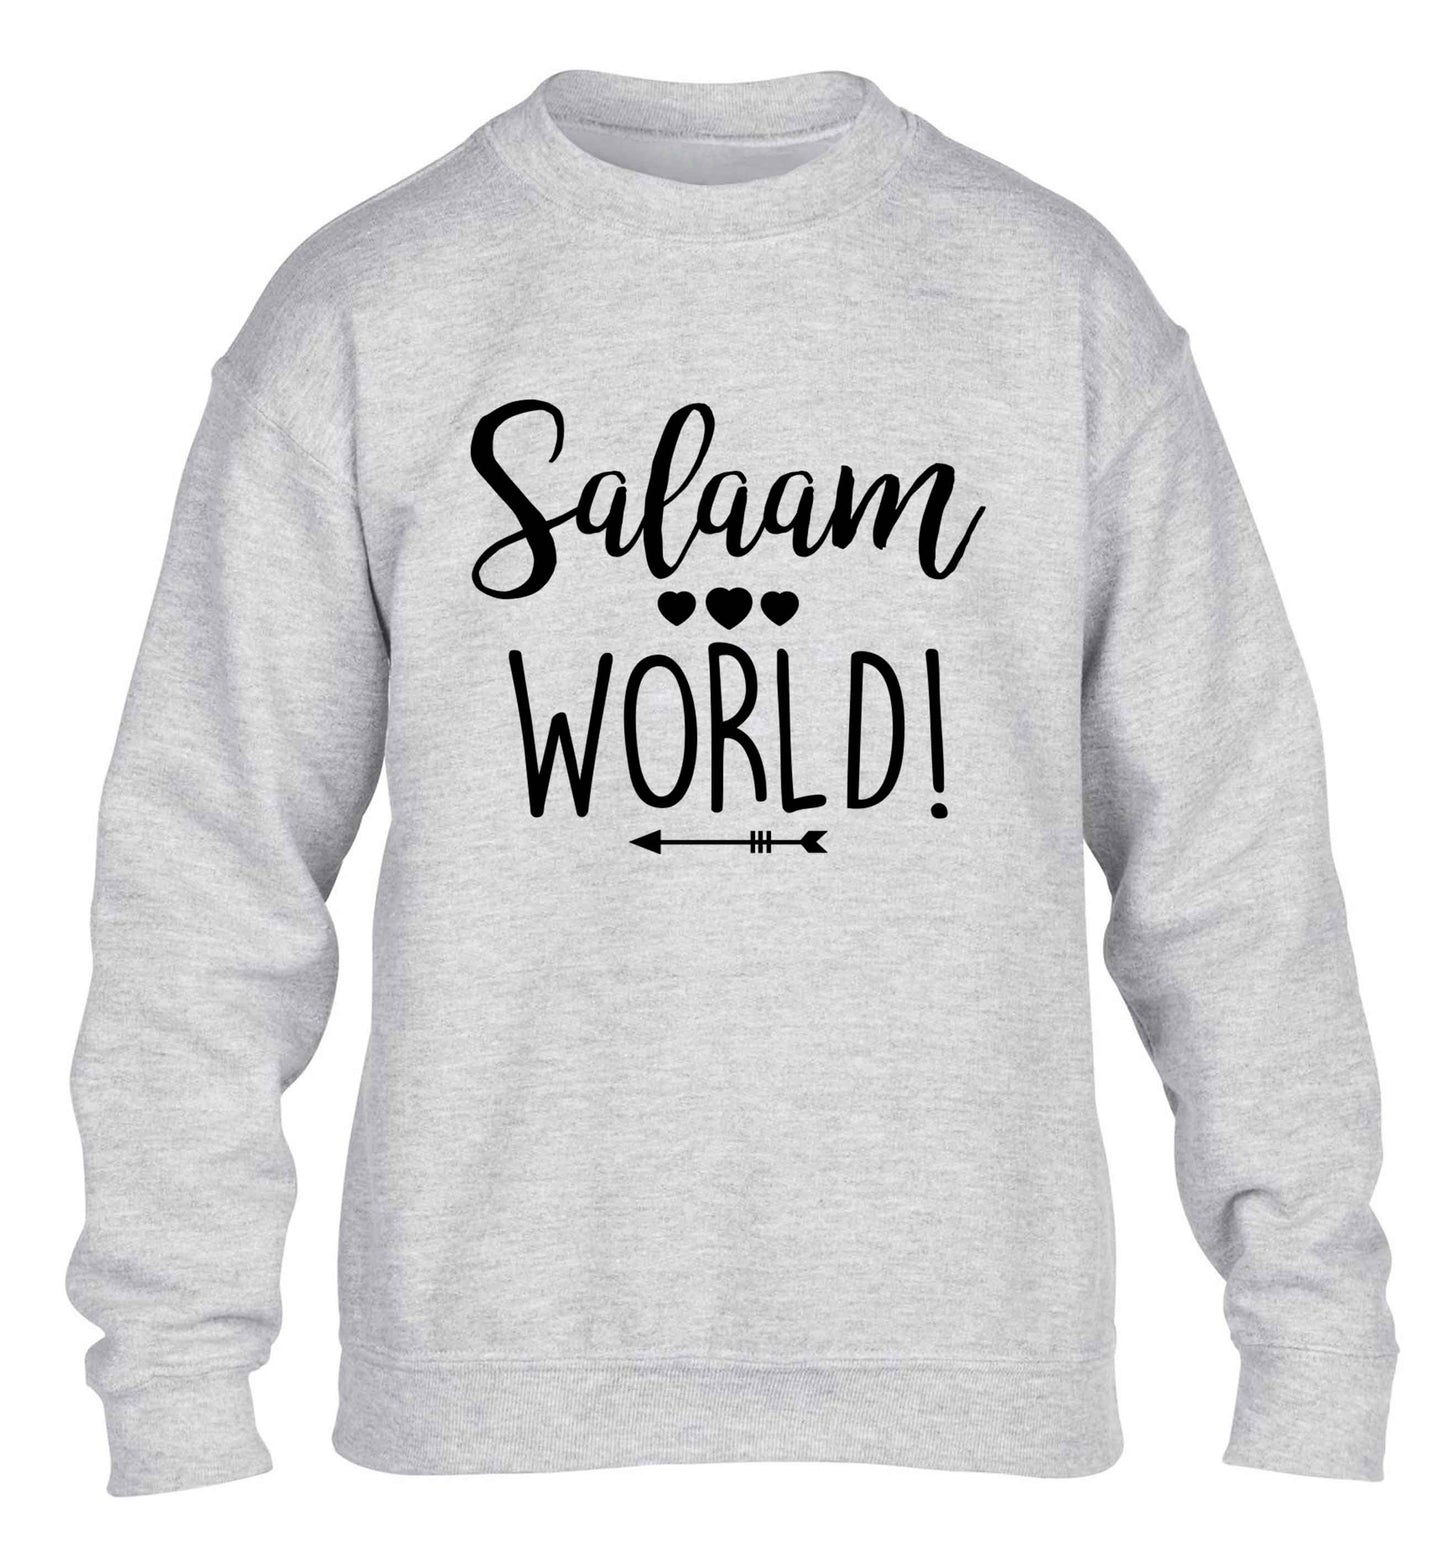 Salaam world children's grey sweater 12-13 Years